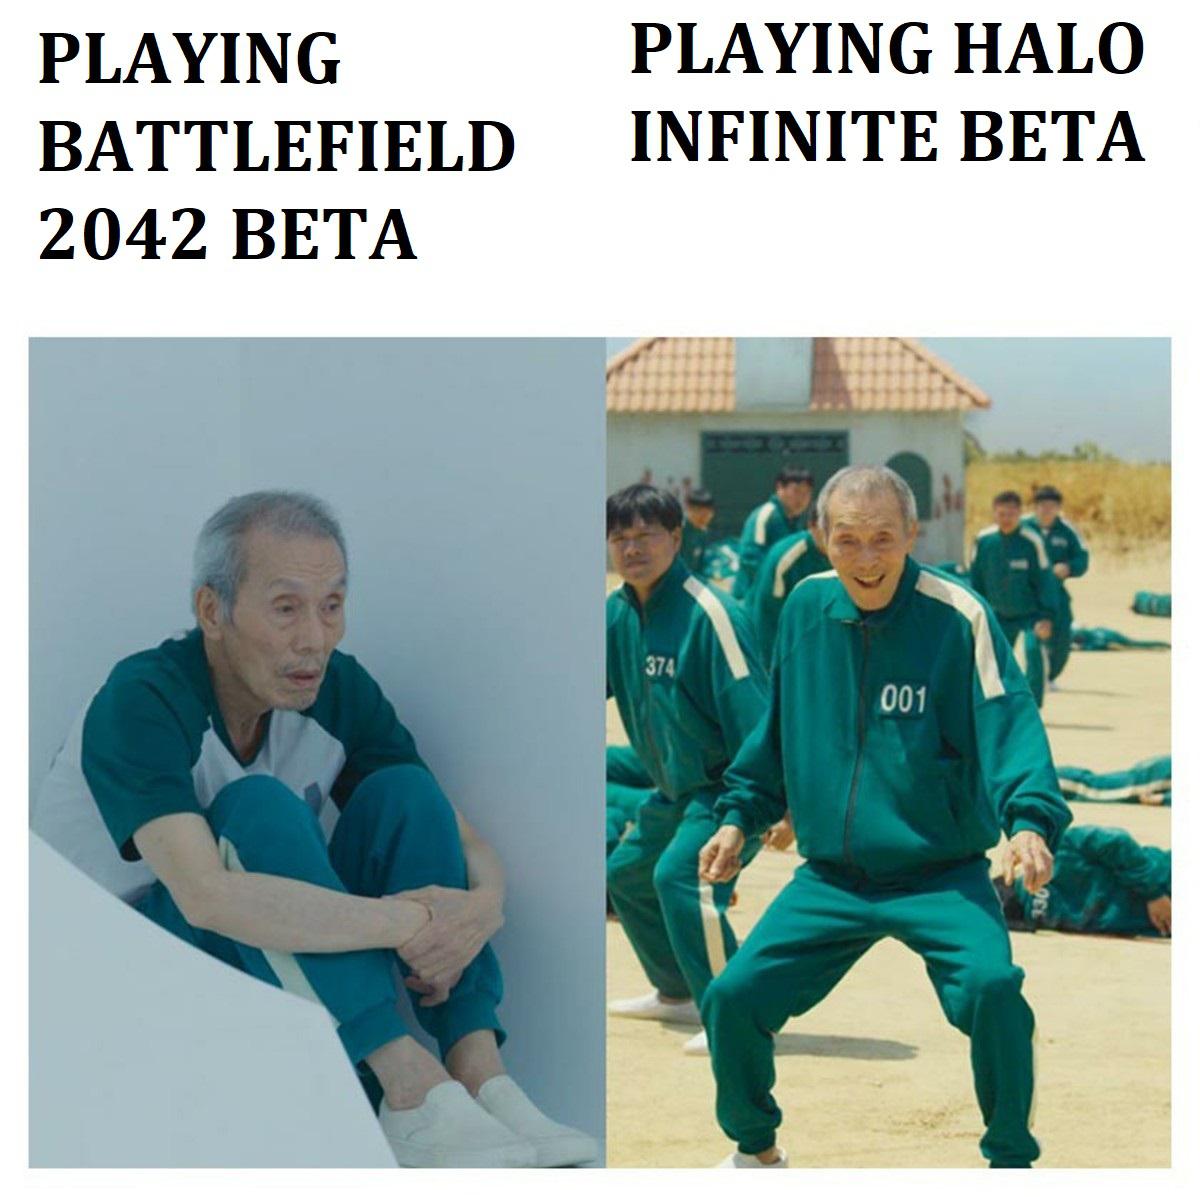 human behavior - Playing Battlefield 2042 Beta Playing Halo Infinite Beta 374 001